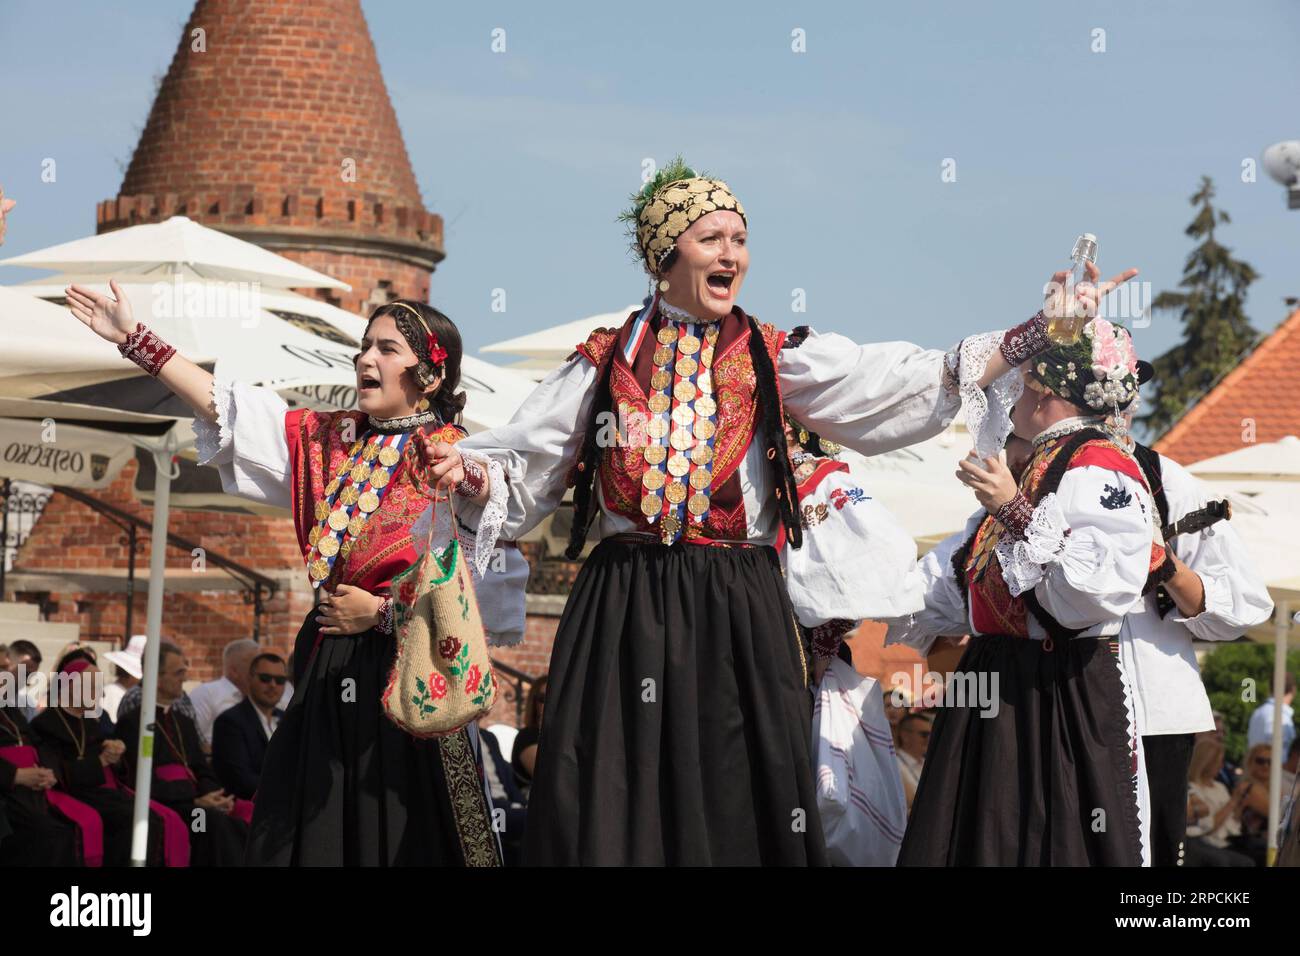 (190707) -- DAKOVO (CROATIA), July 7, 2019 -- People in traditional costumes perform during the 53rd Dakovacki vezovi festival in Dakovo, Croatia, on July 7, 2019. Dakovacki vezovi festival, one of the major cultural events in Croatia, presents traditional costumes and performances. ) CROATIA-DAKOVO-FOLKLORE-FESTIVAL DubravkaxPetric PUBLICATIONxNOTxINxCHN Stock Photo